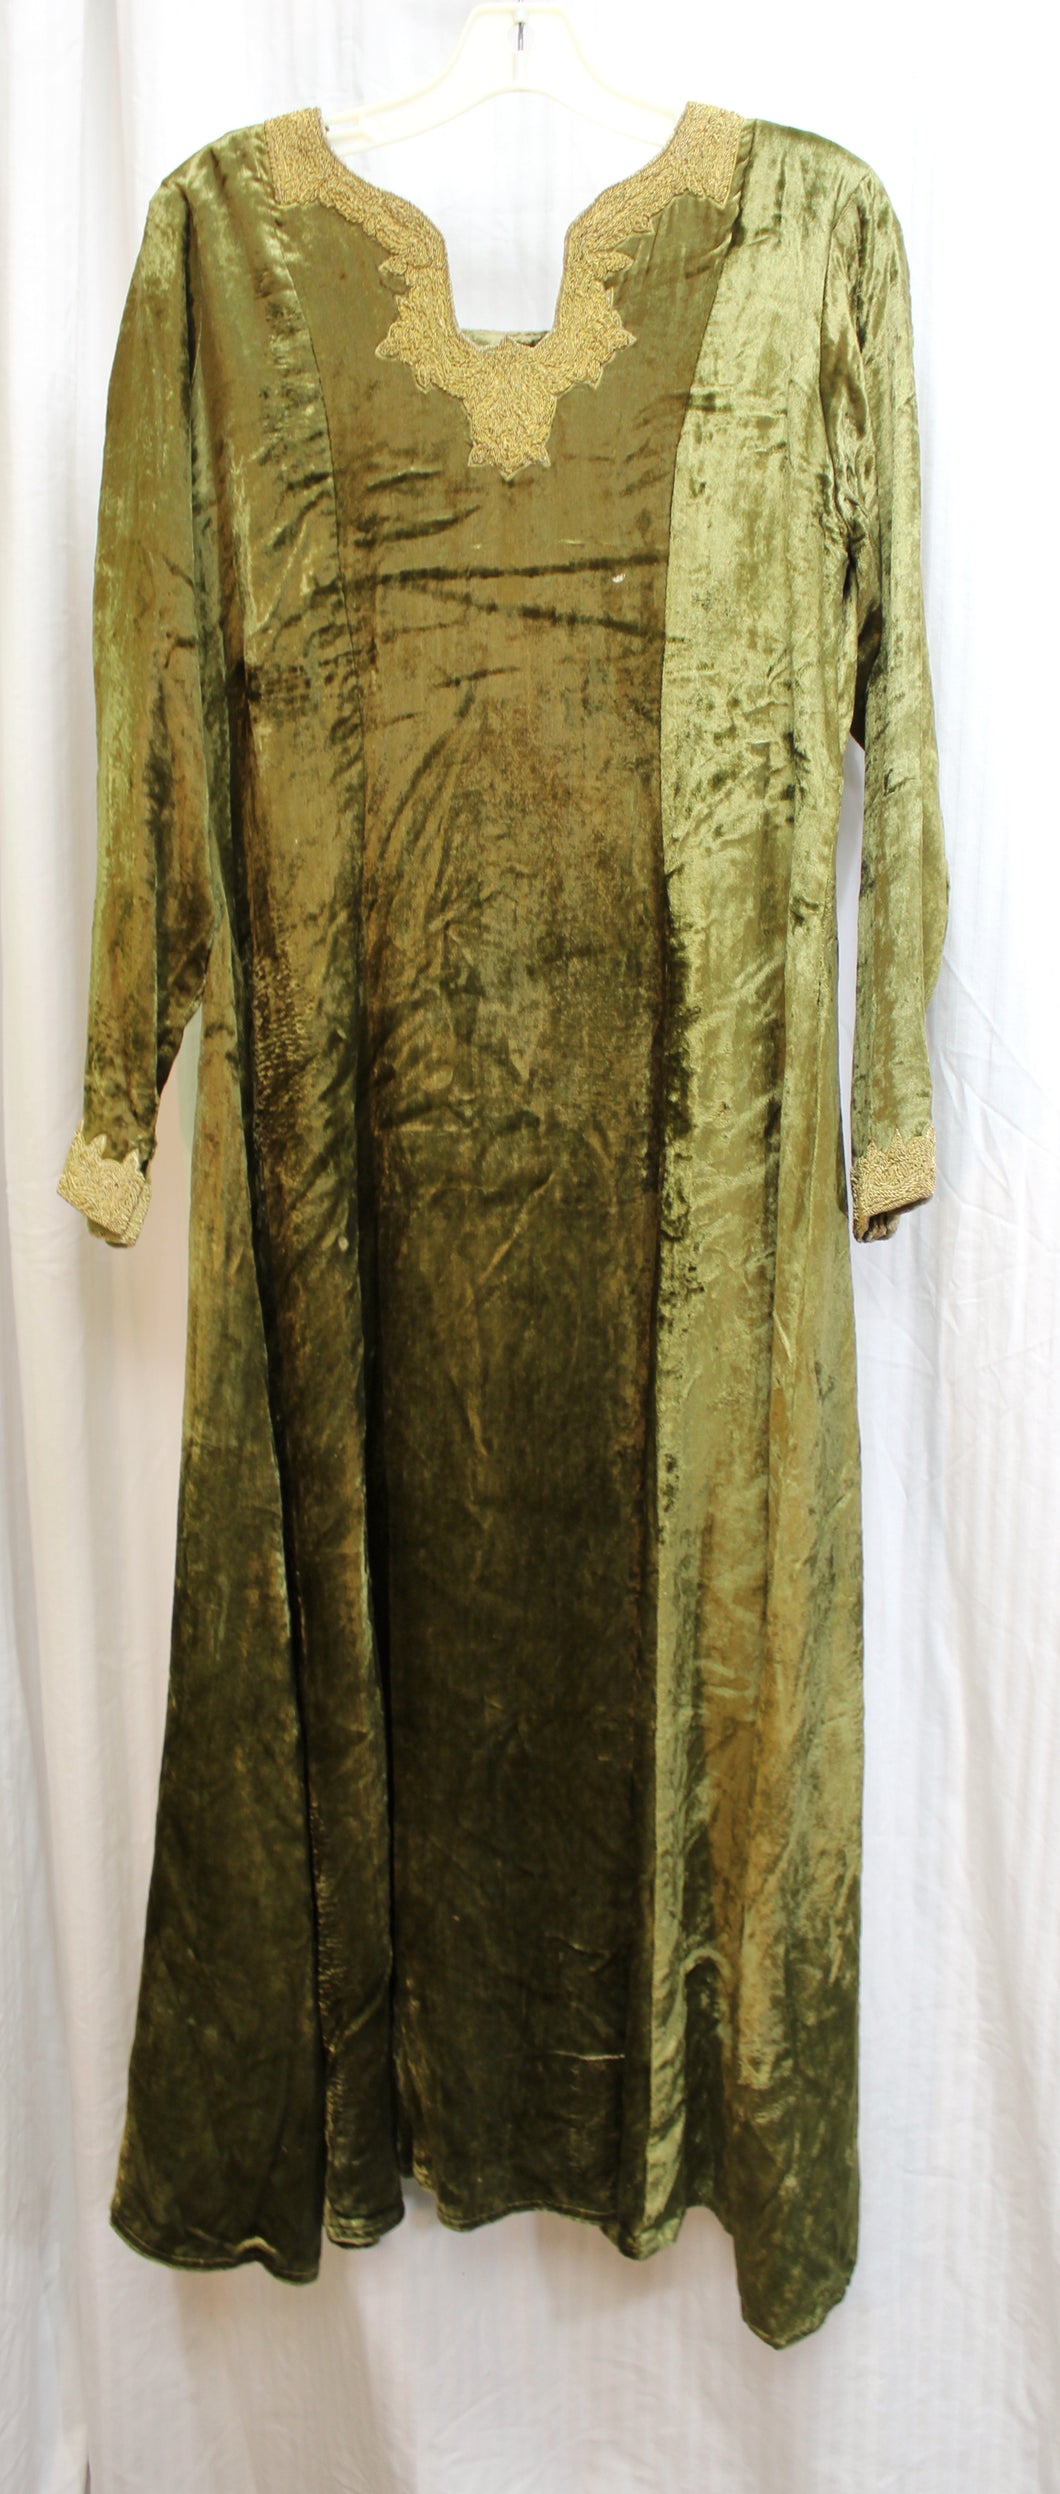 Handmade Velvet Medieval / Renaissance/fairy Tale Style Dress w/ Embroidered Neck & Sleeve Hem Trims (See Measurements)